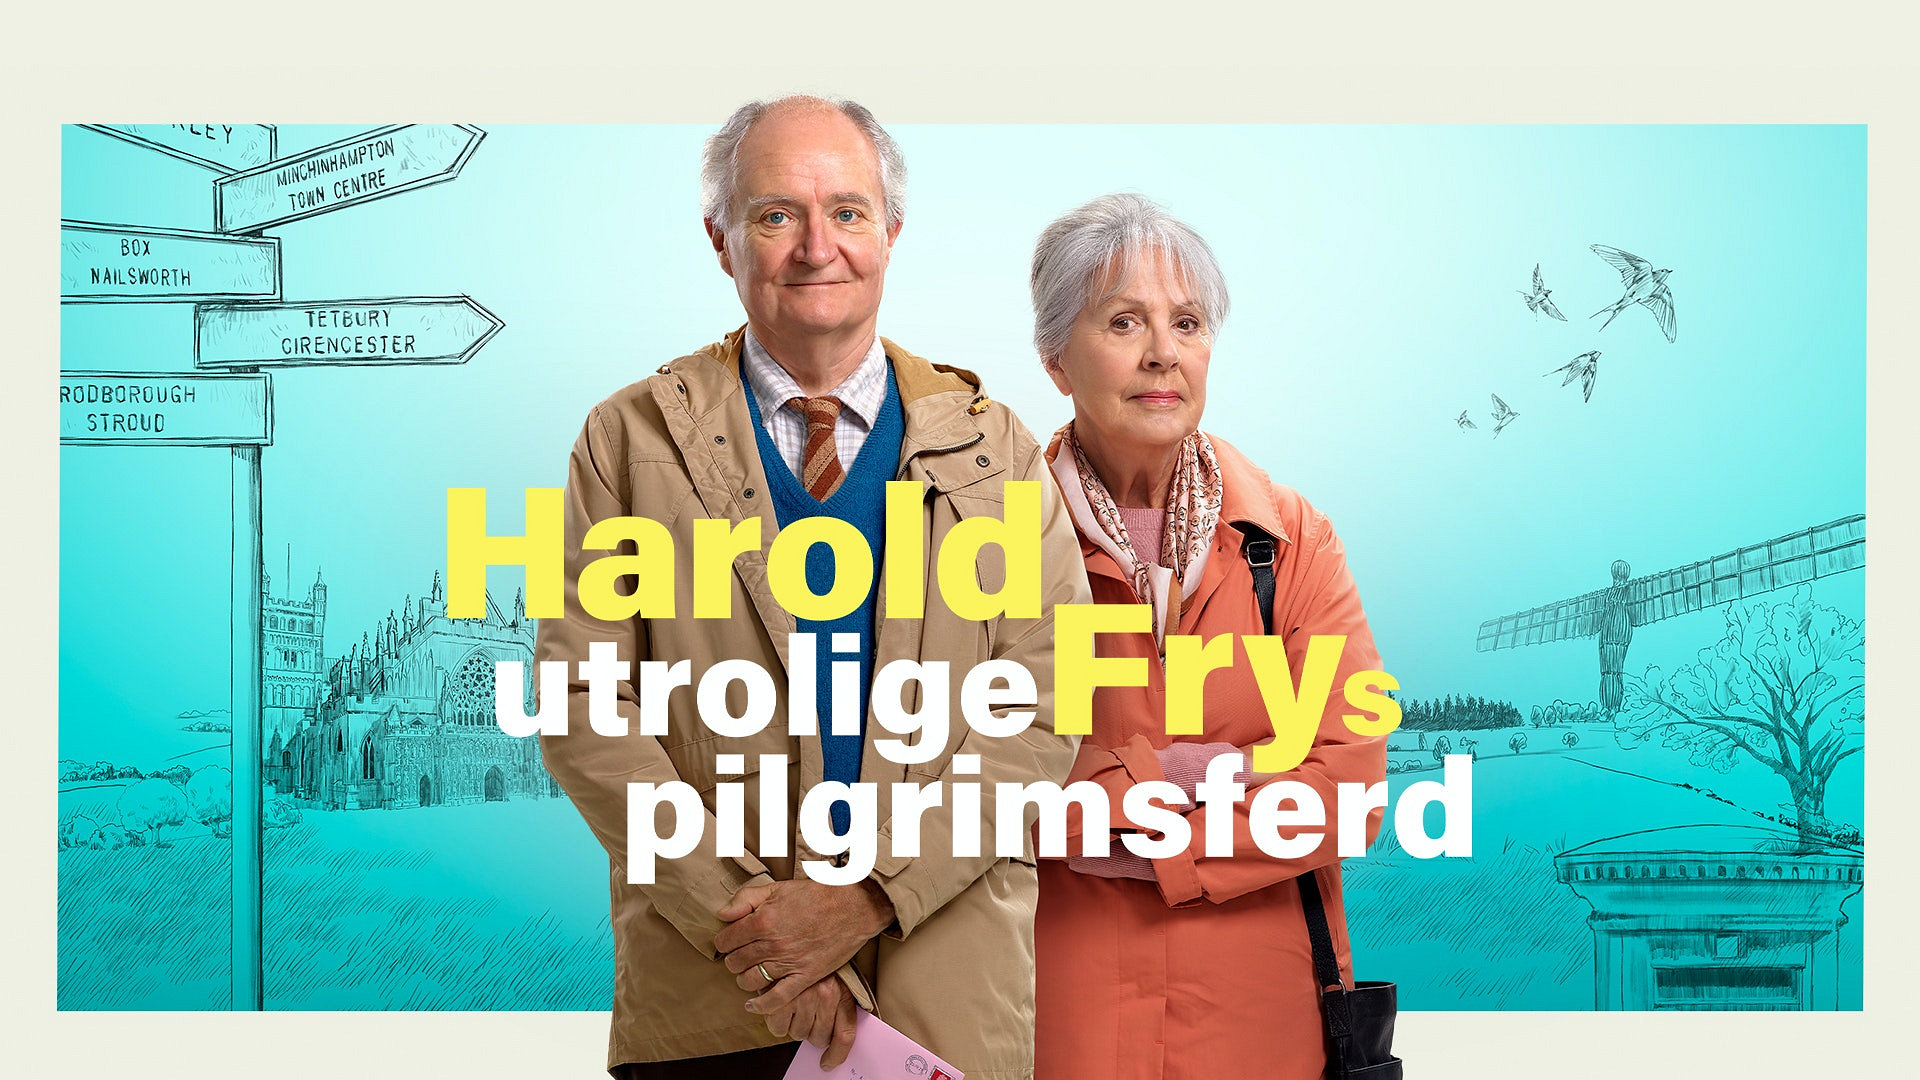 Harold Frys utrolige pilgrimsferd